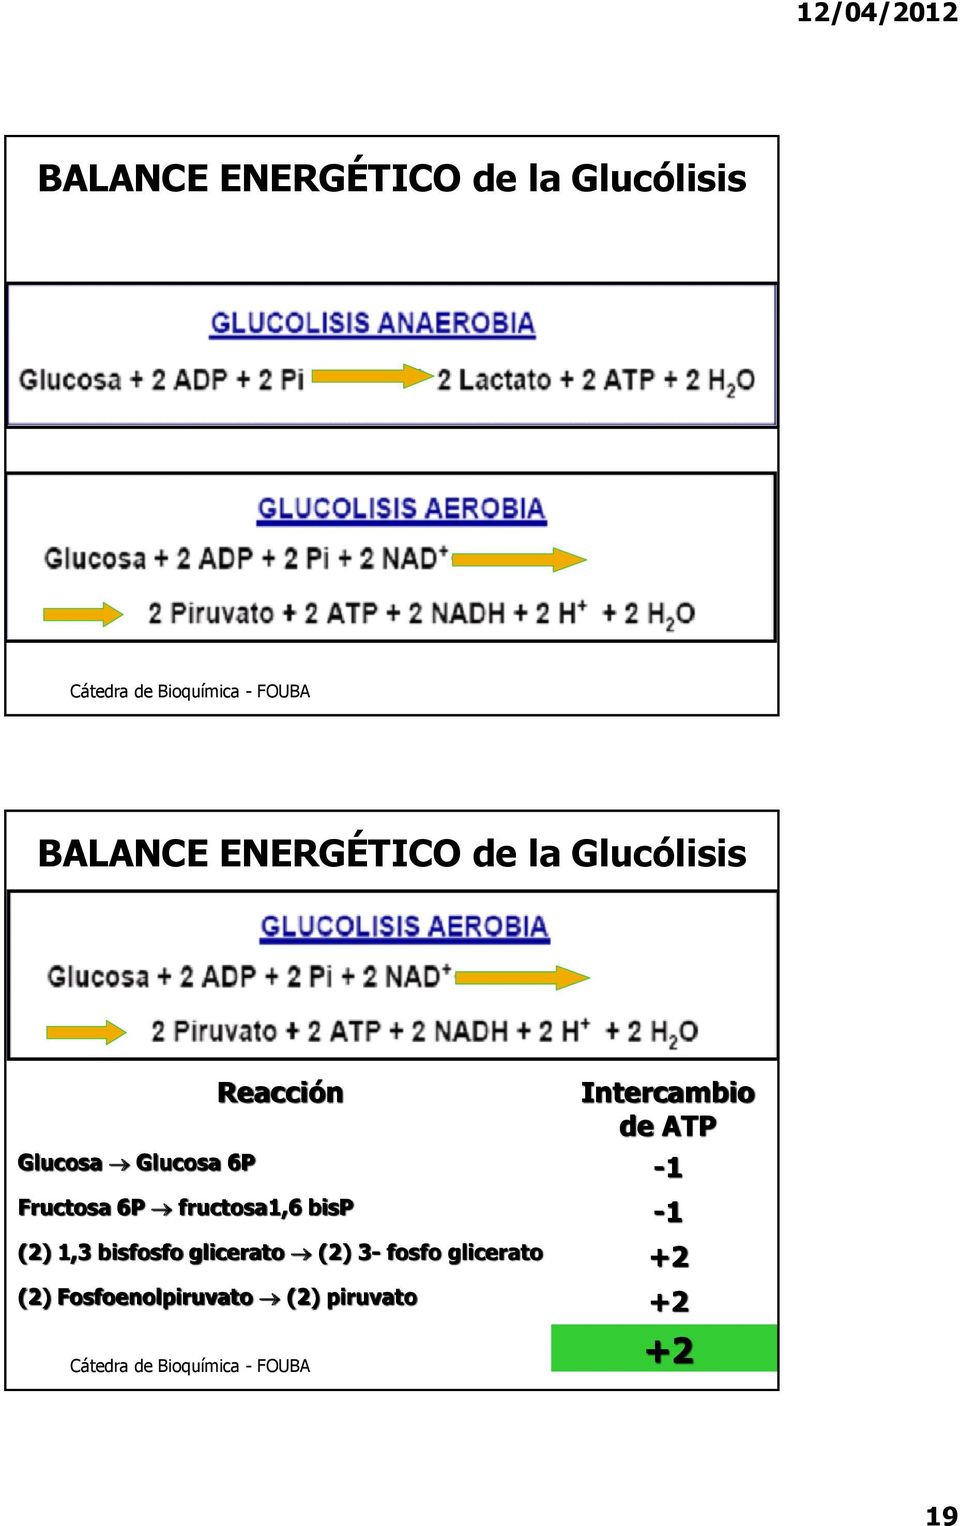 Fructosa 6P fructosa1,6 bisp -1 (2) 1,3 bisfosfo glicerato (2)